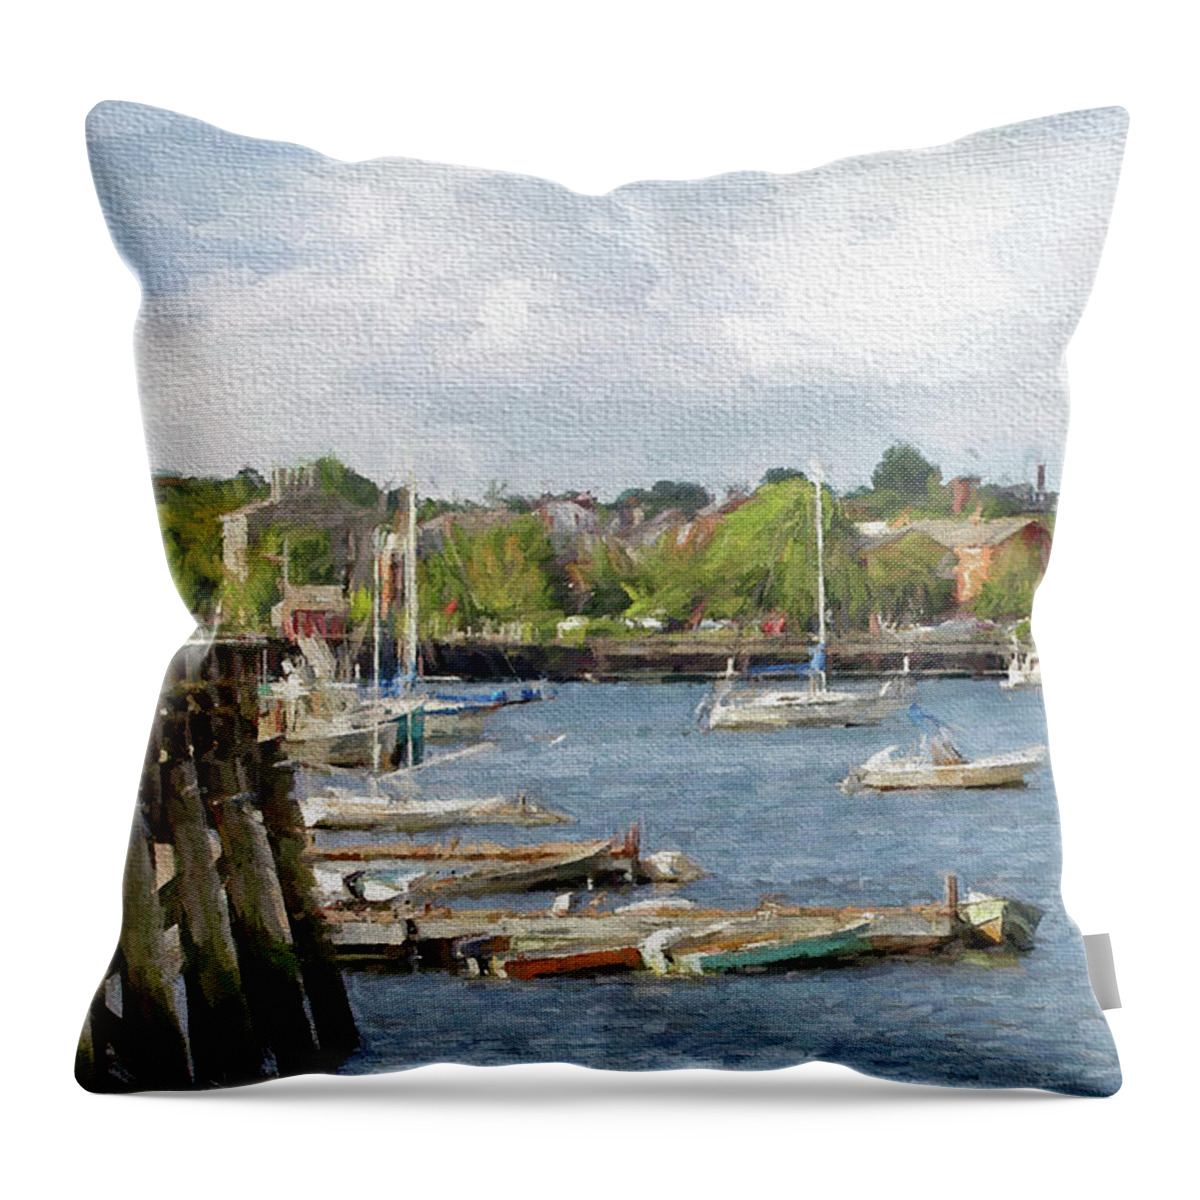 Boat Throw Pillow featuring the photograph Newburyport Harbor by Karen Lynch